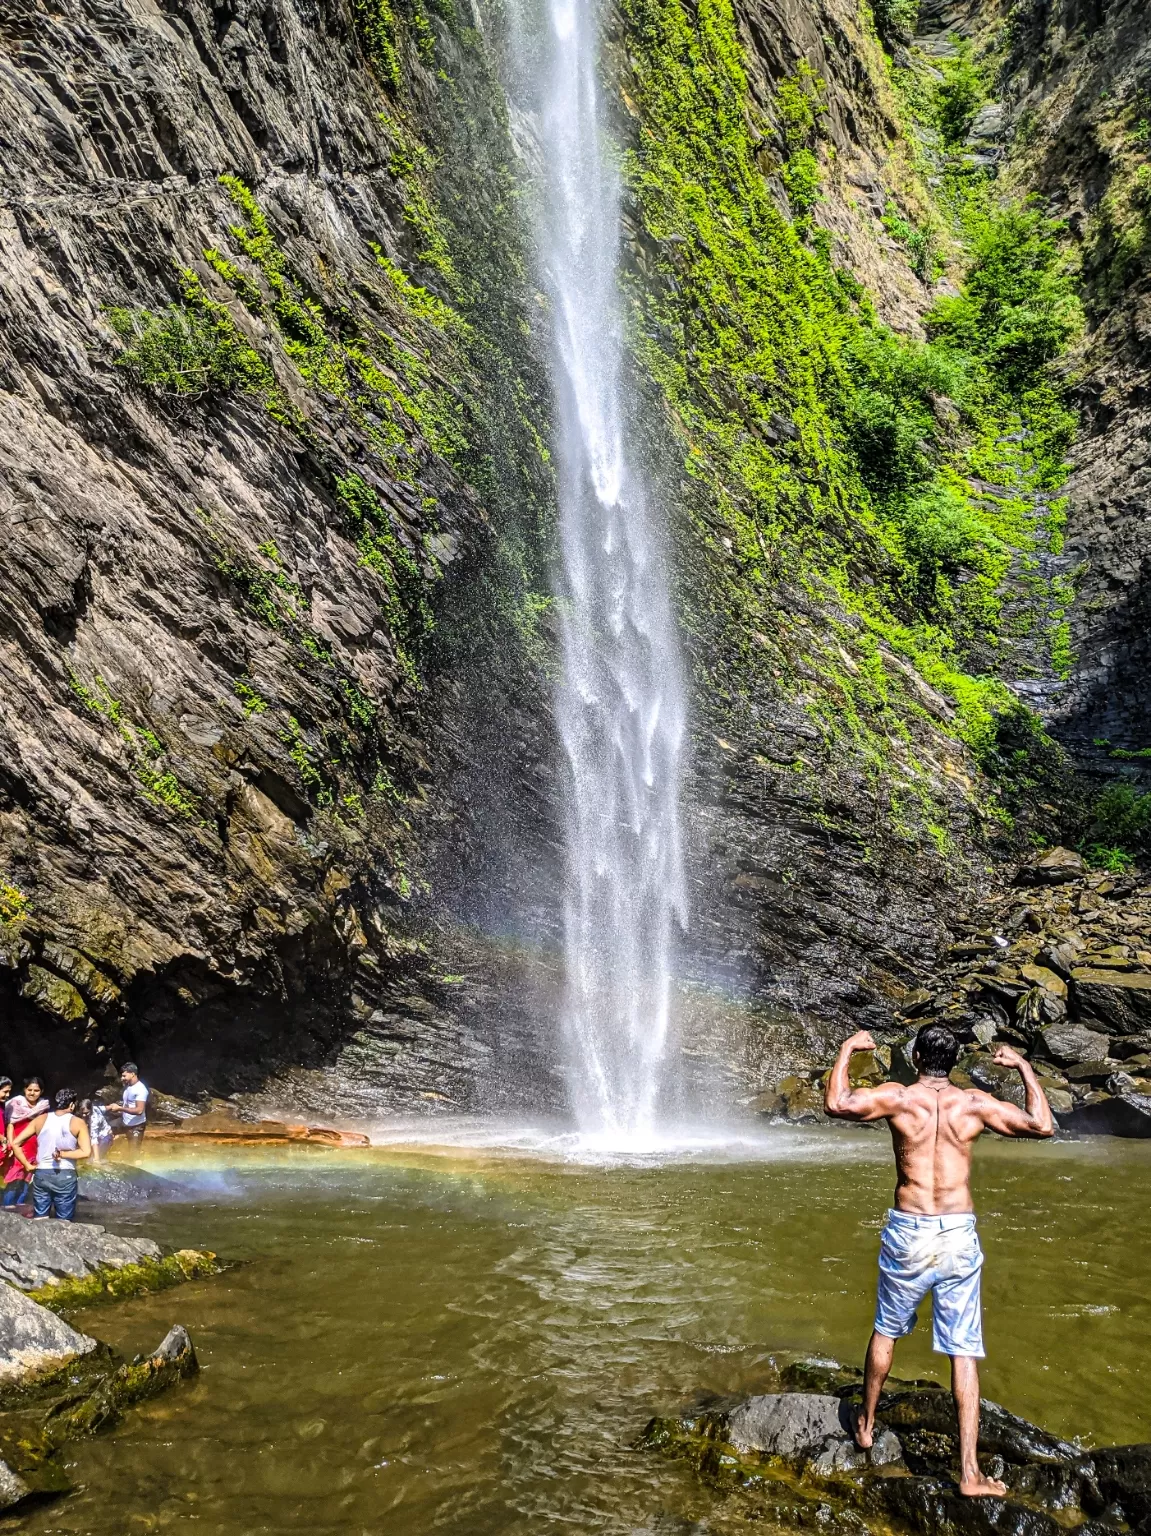 Photo of Koodlu Waterfall By abdul rahiman